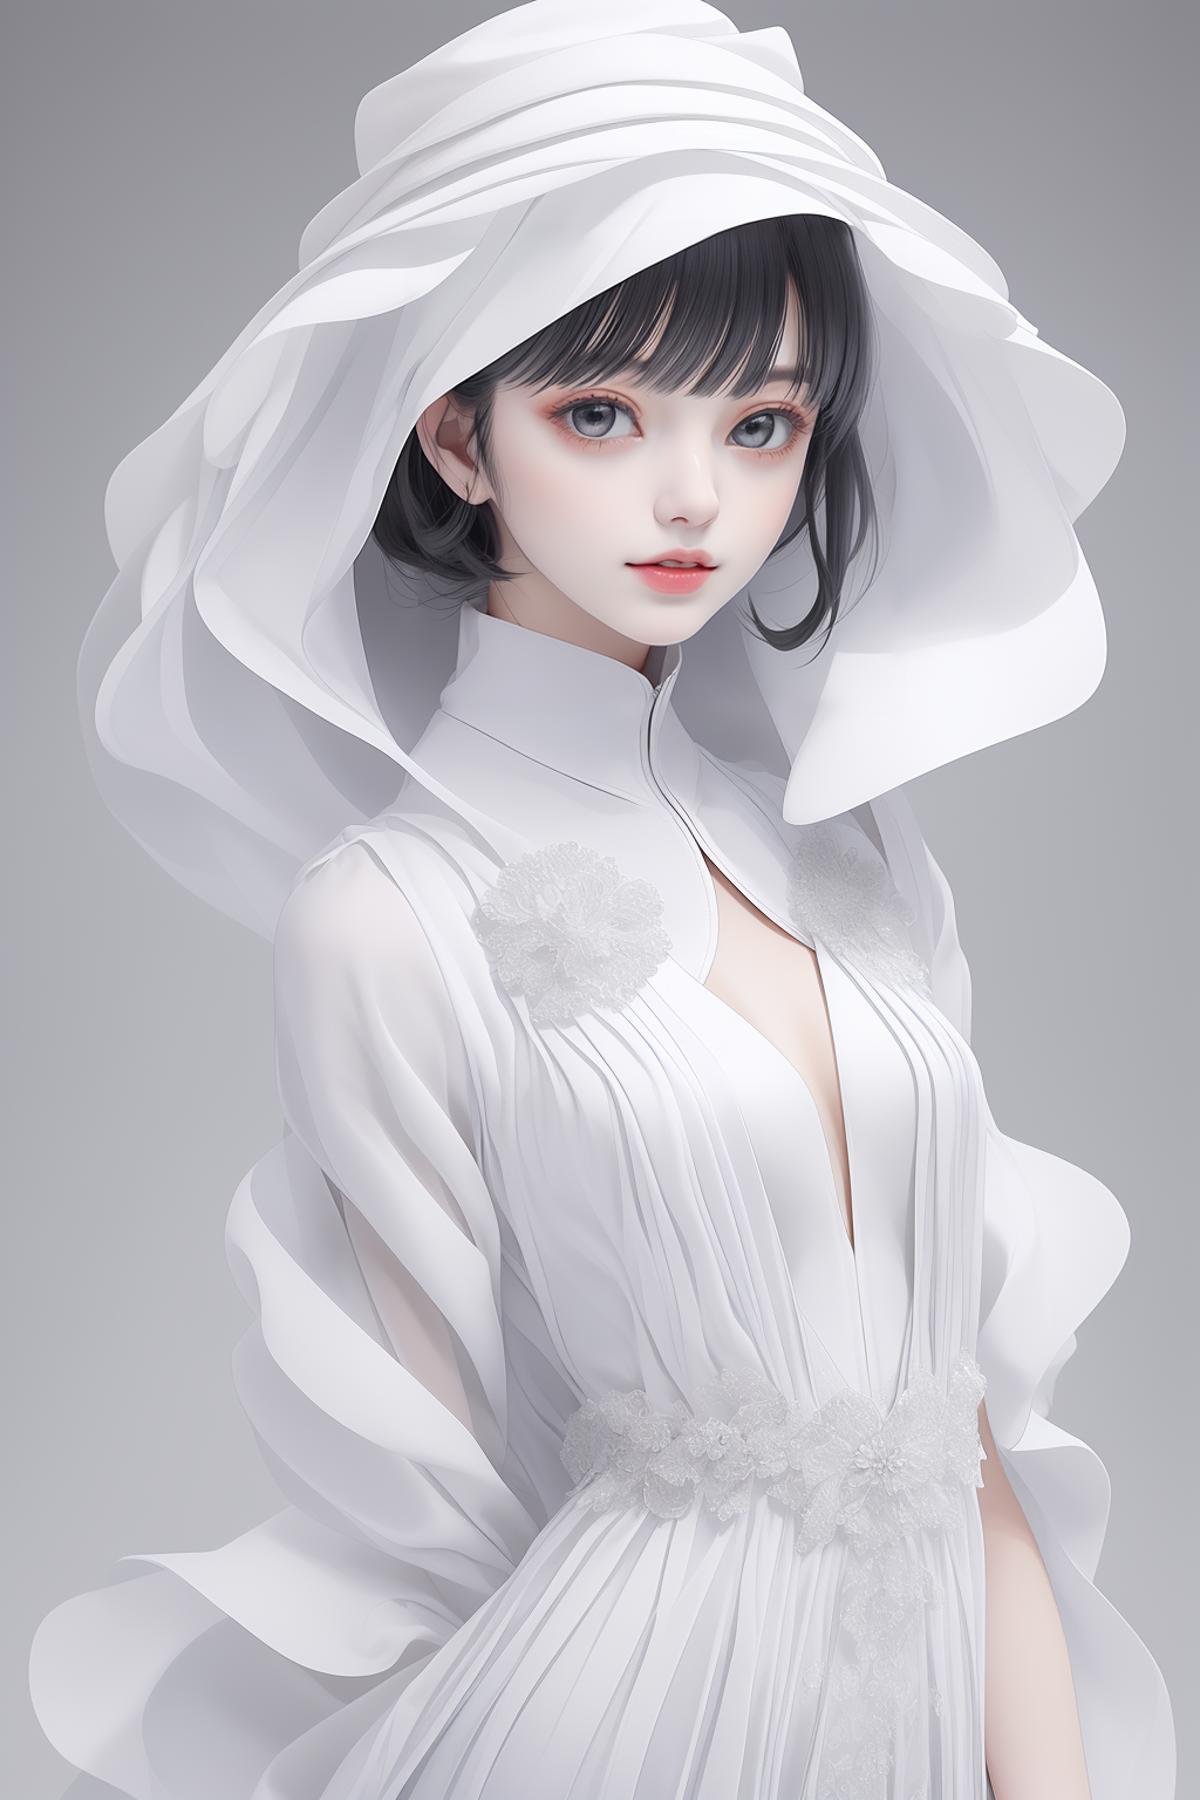 AI model image by daohuozhe428569